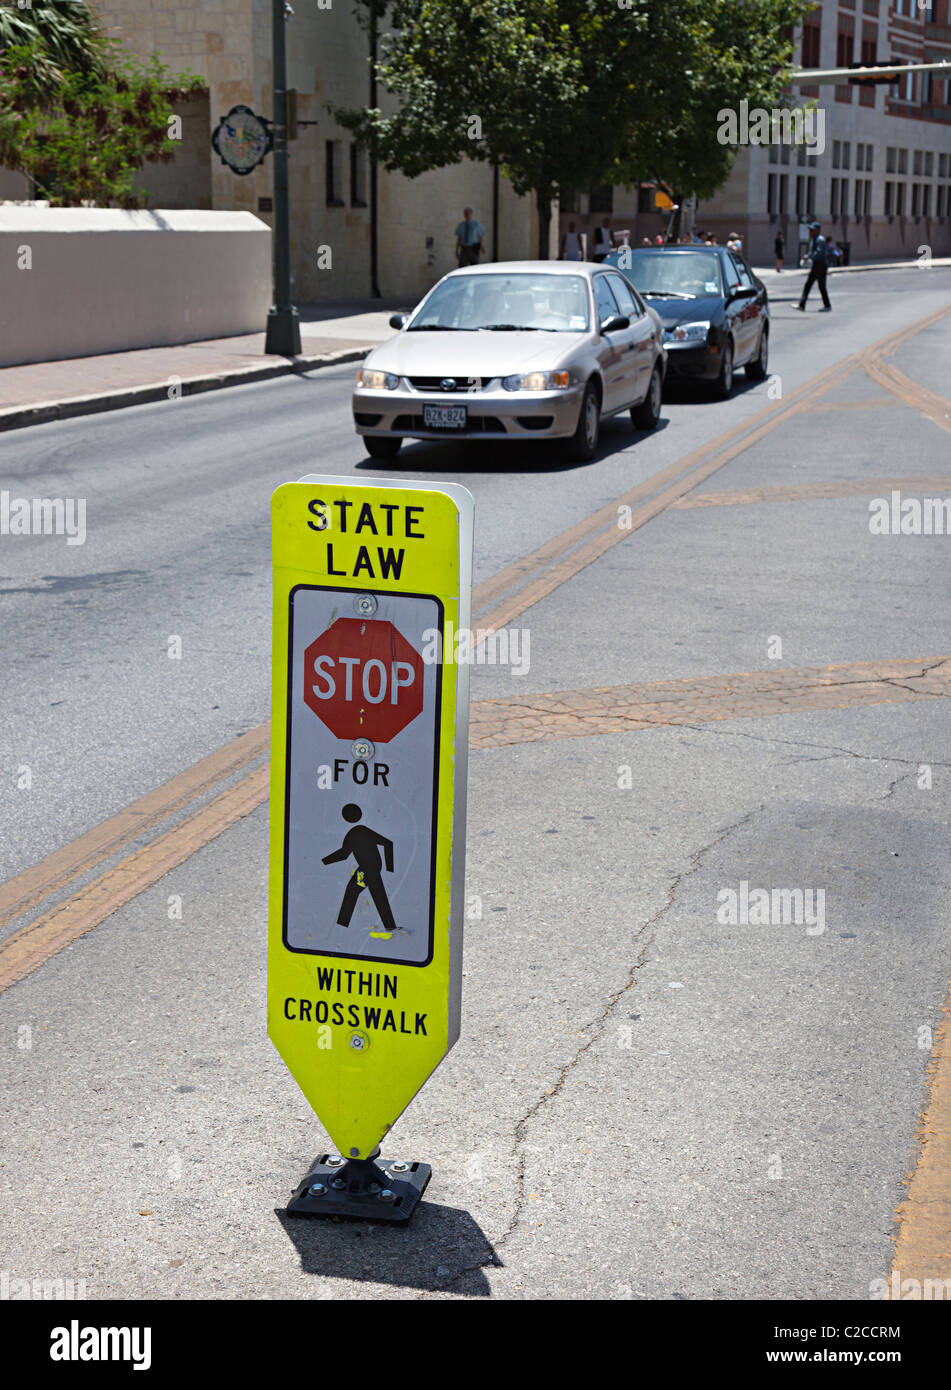 Staatsgesetz Stop für Fußgänger innerhalb Zebrastreifen anmelden Straße San Antonio Texas USA Stockfoto